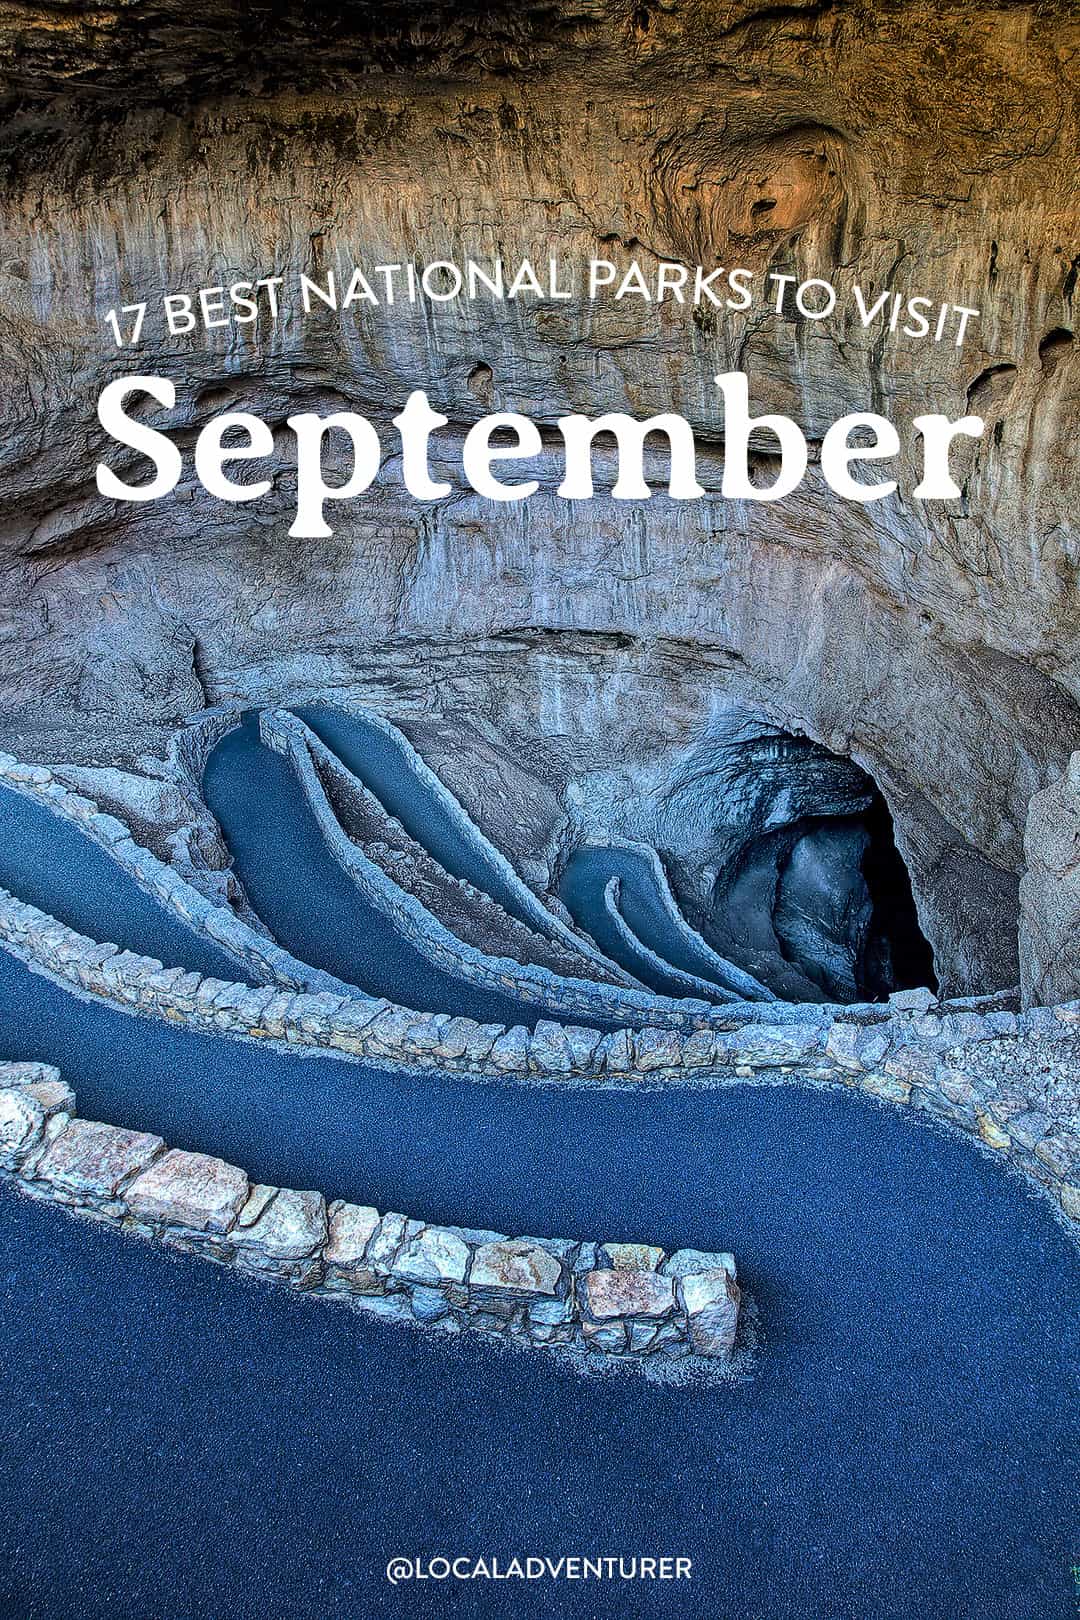 17 best national parks in september title over photo of Carlsbad Cavern Natural Entrance